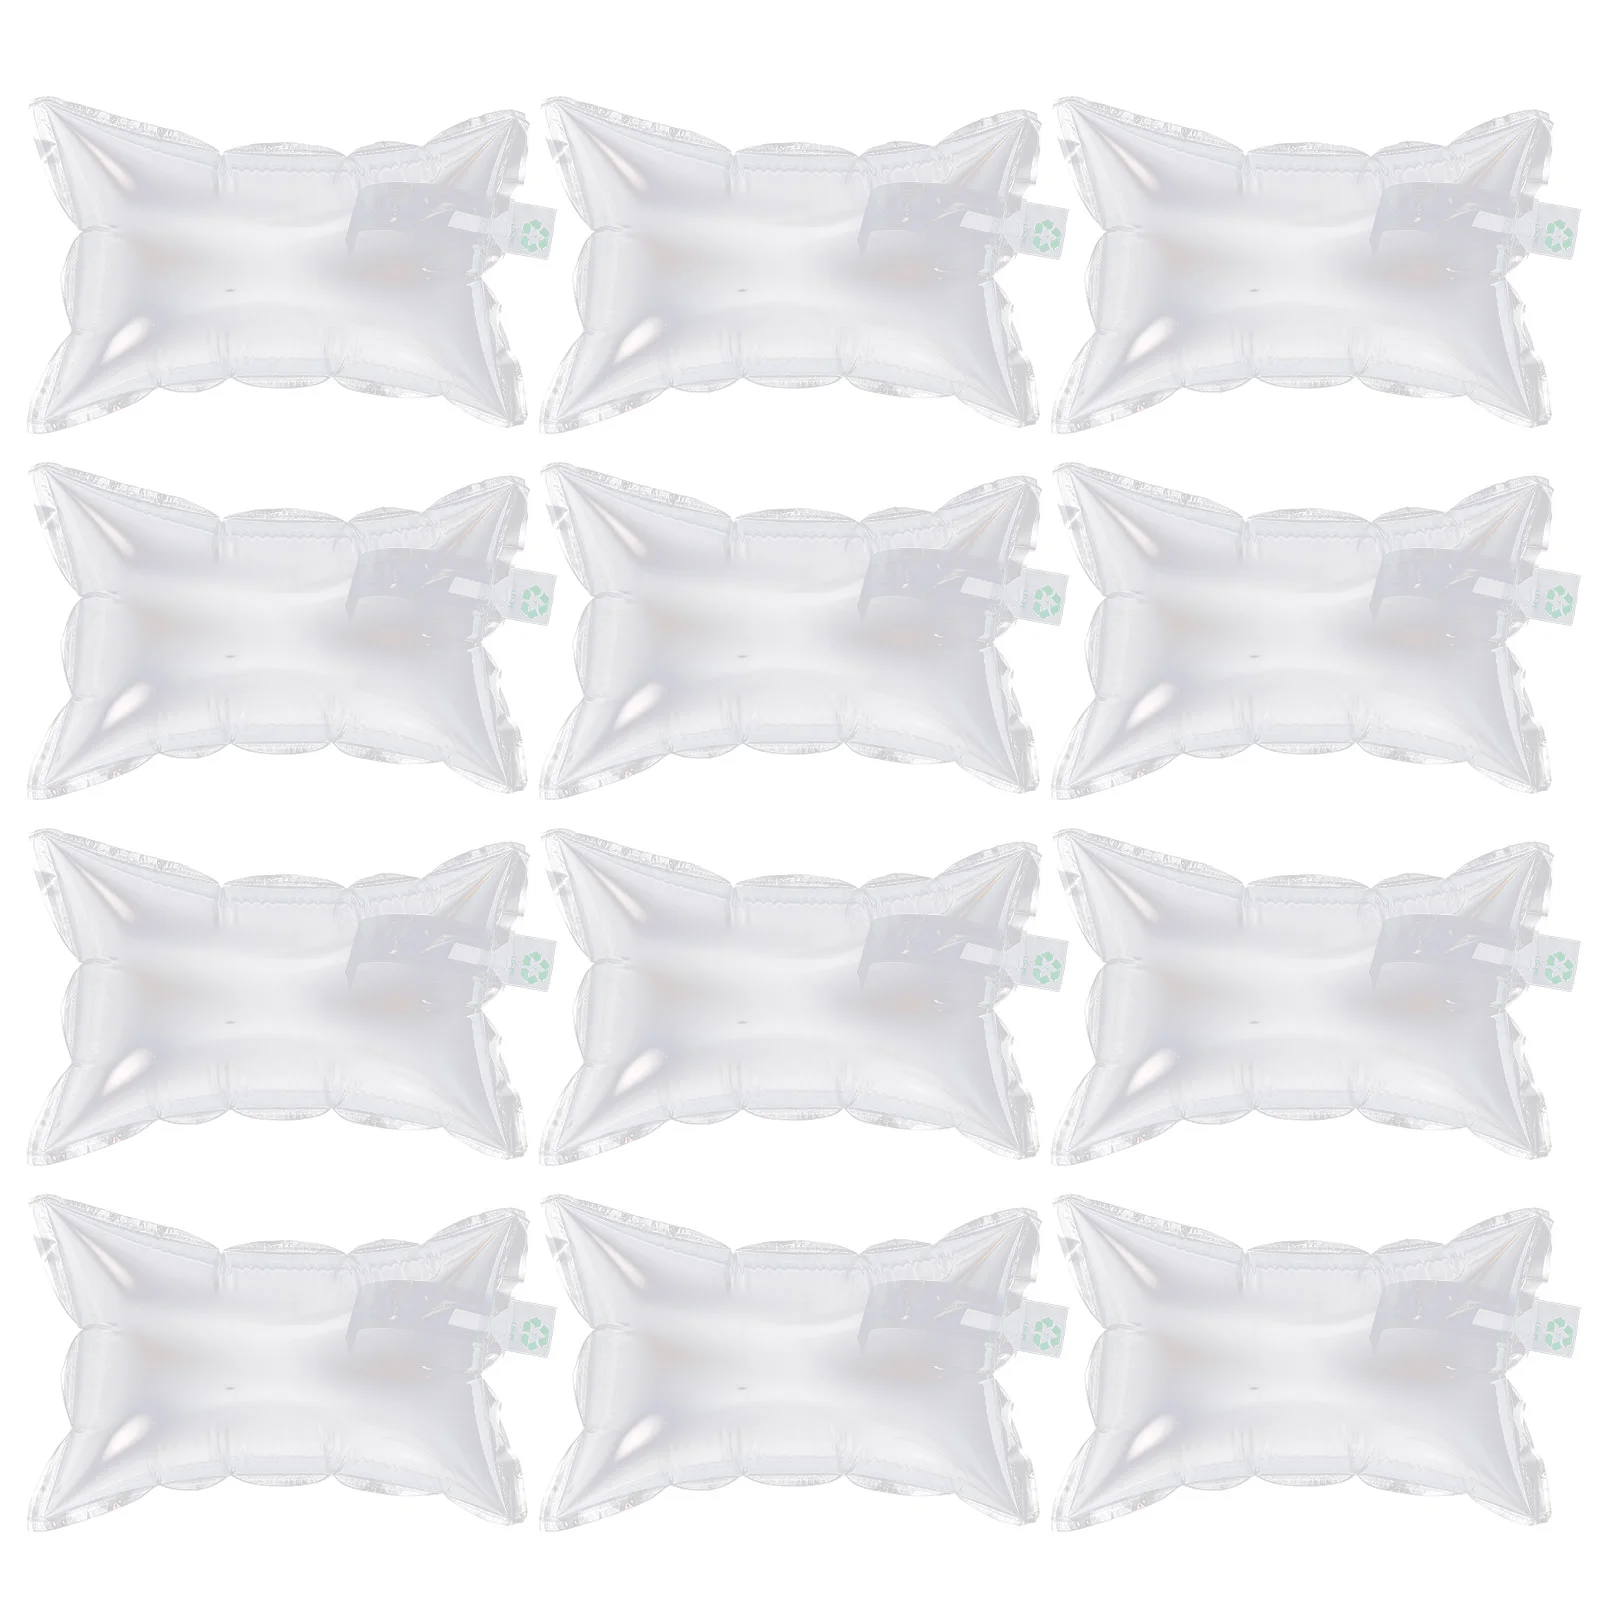 

30 PCS Filling Bag Clear Plastic Envelopes Bubble Cushion Sturdy Air Blocking Wrap 7-layer Inflatable